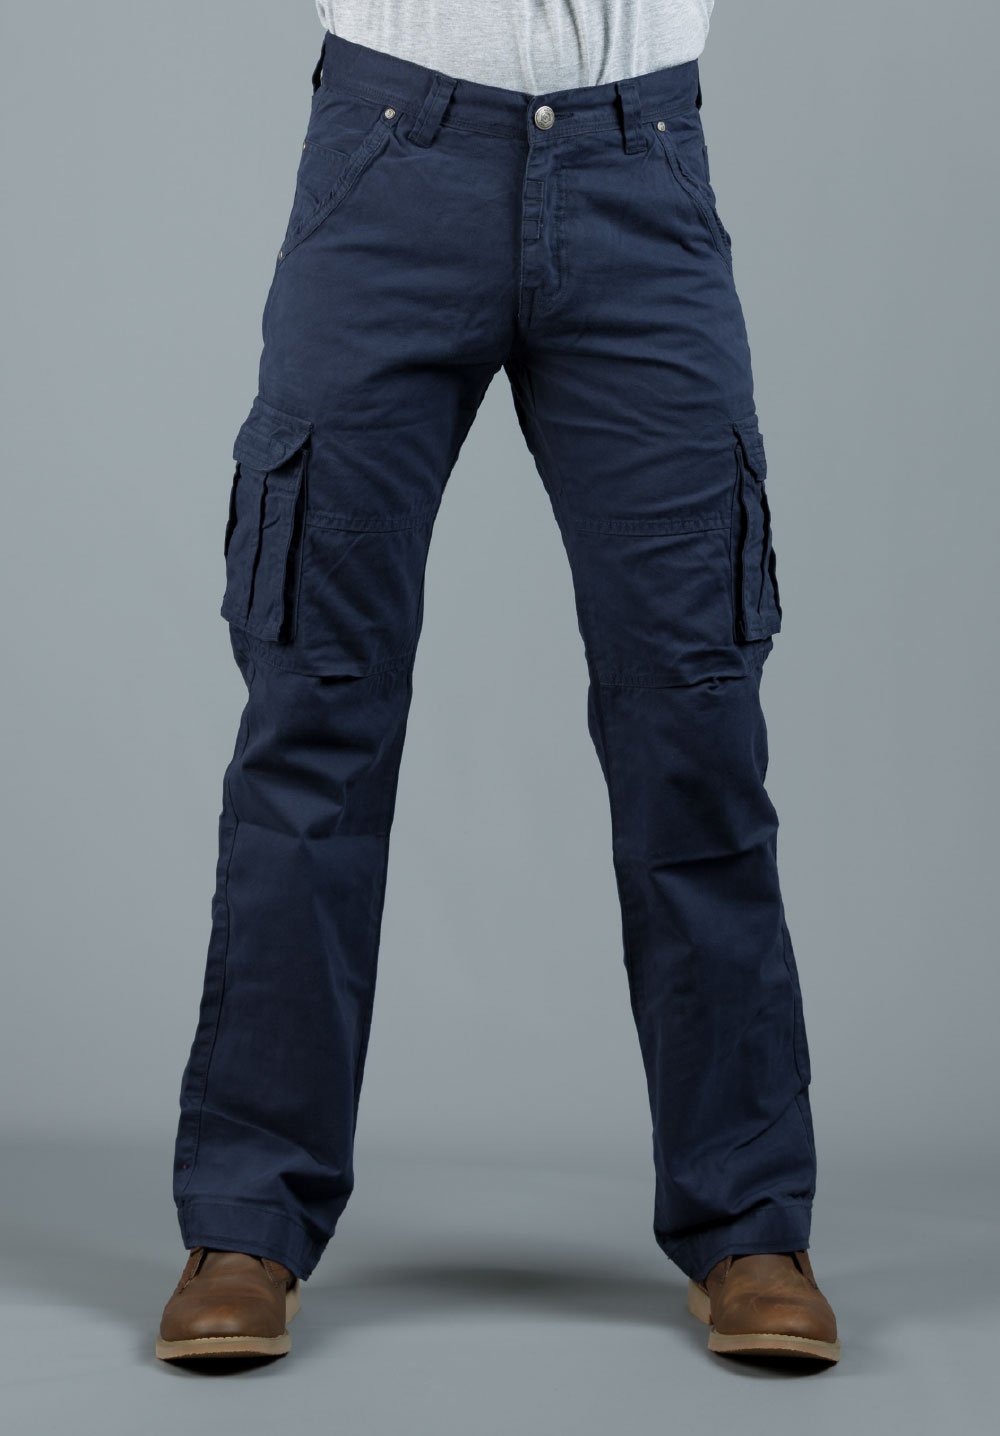 EARL DARK BLUE COMBAT PANTS | Gasoline.ie Irish owned online clothing ...